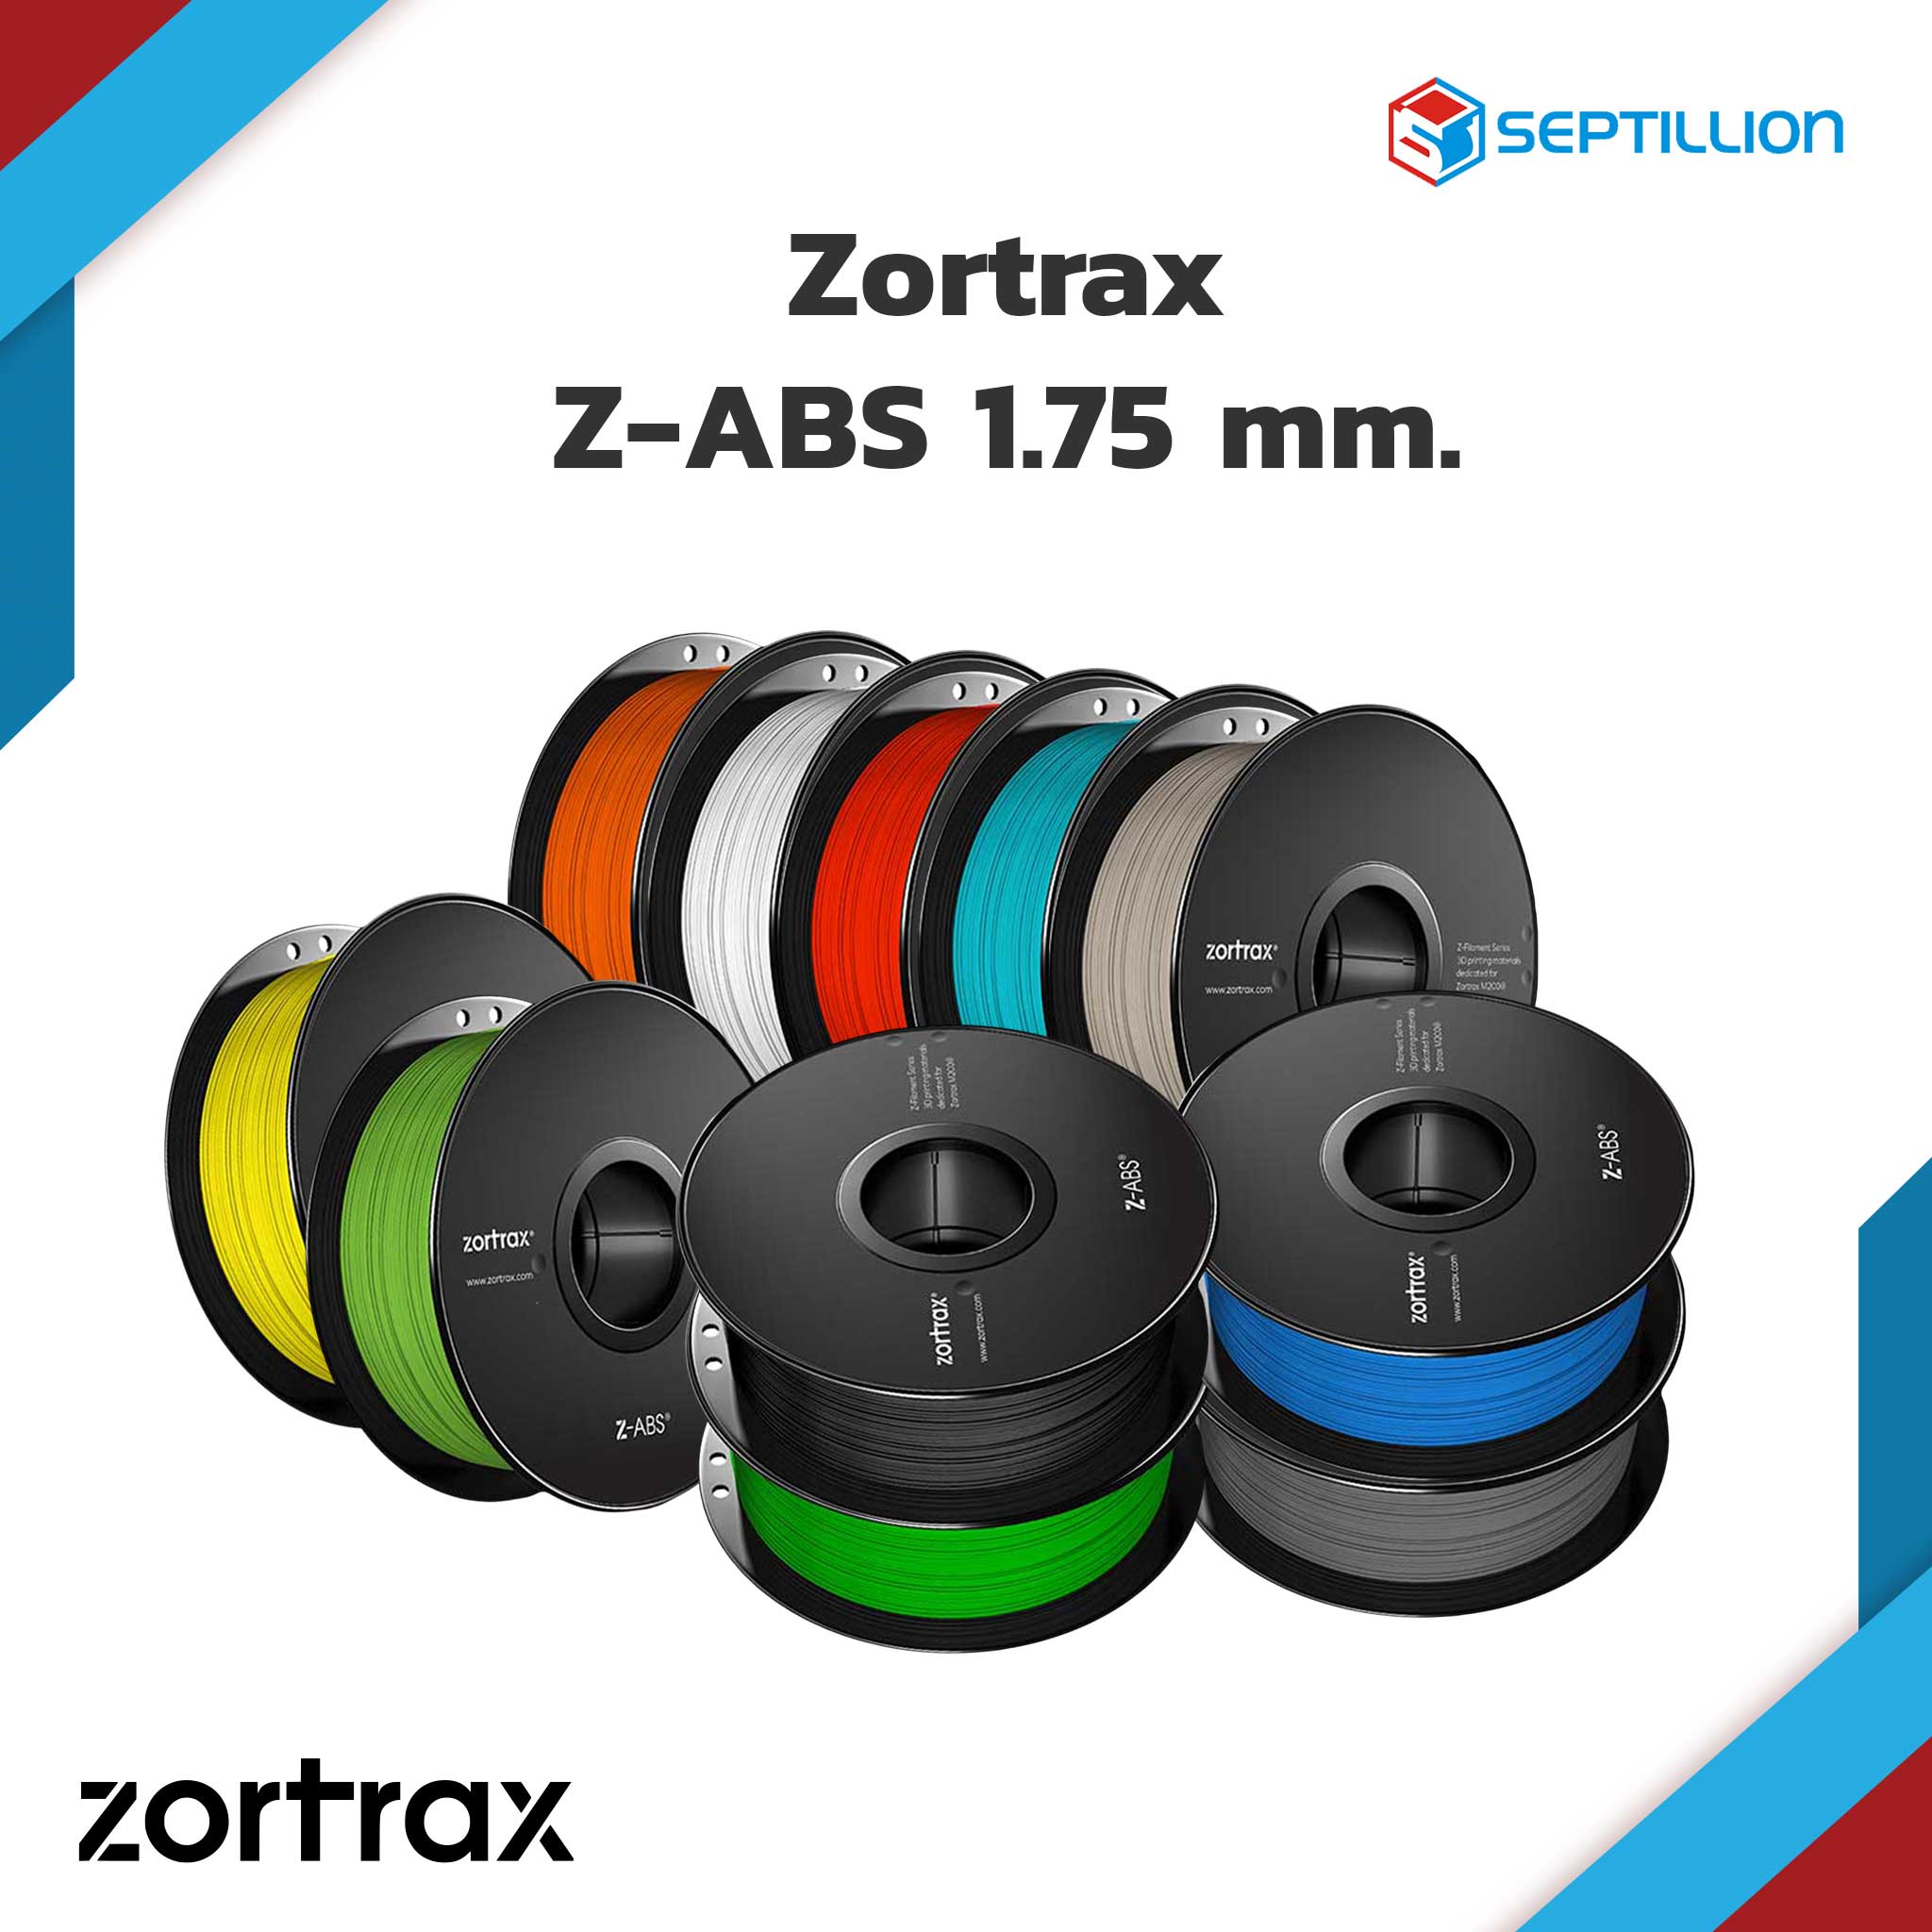 Zortrax Z-ABS Filament 1.75mm. 800g. – Septillion Co., Ltd.